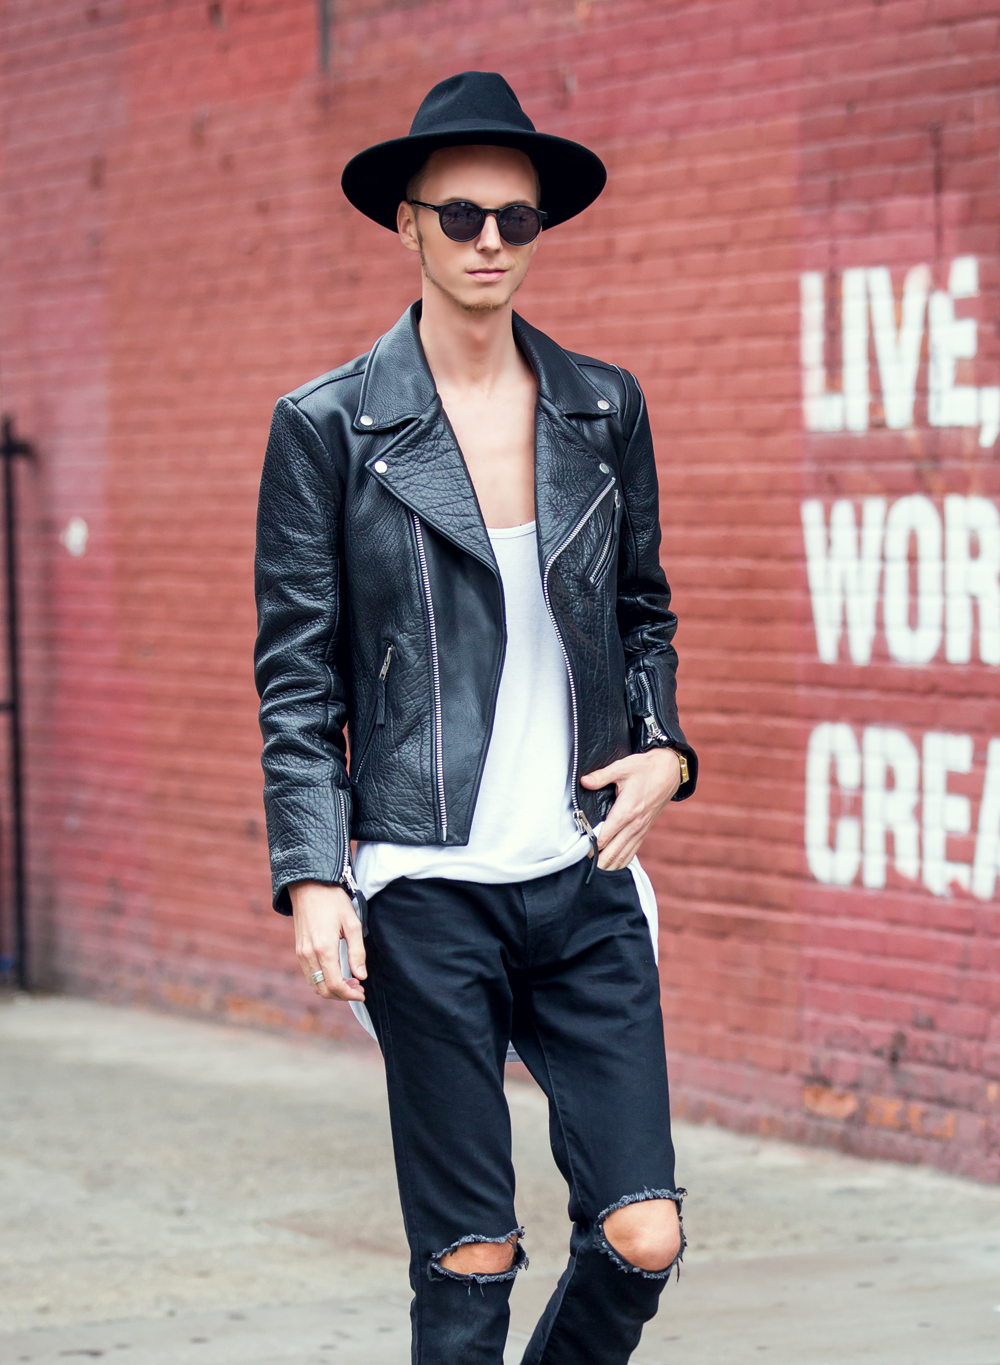 new-york-city-fashion-week-2014-street-style-menswear-leather-bikerjacket-fedora-hat-ferfidivat-nyc-fashion-blogger-_5_.png